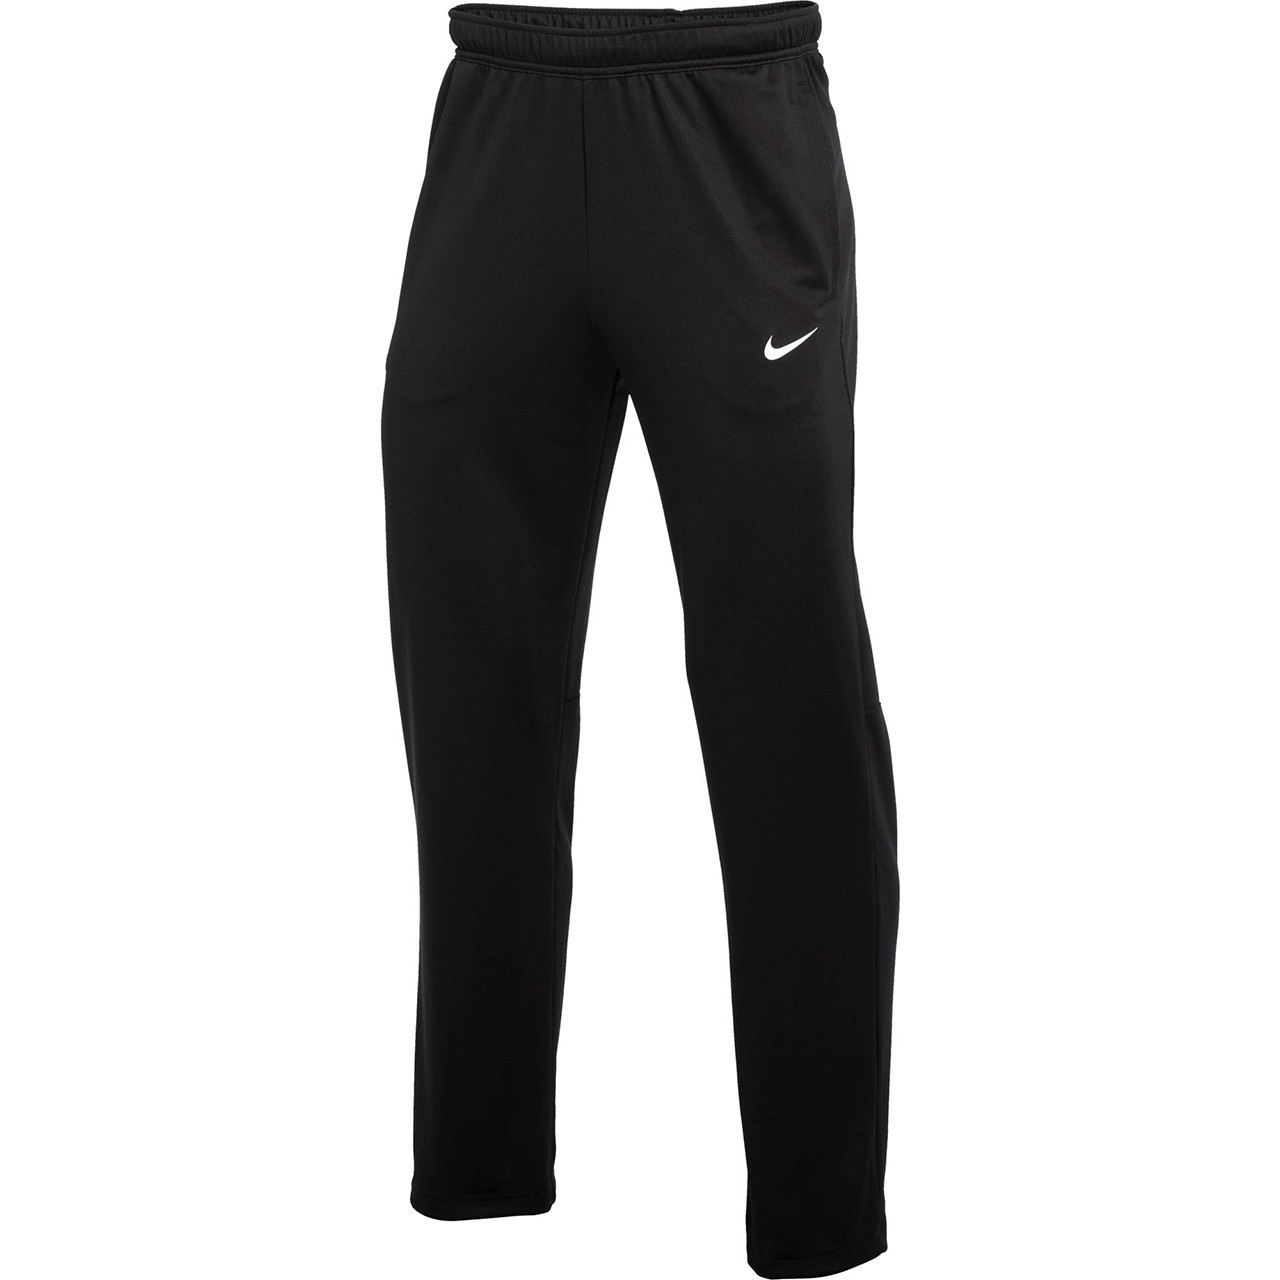 Nike Pants Women Medium Gray Wide Leg Workout Fitness Gym Athletic